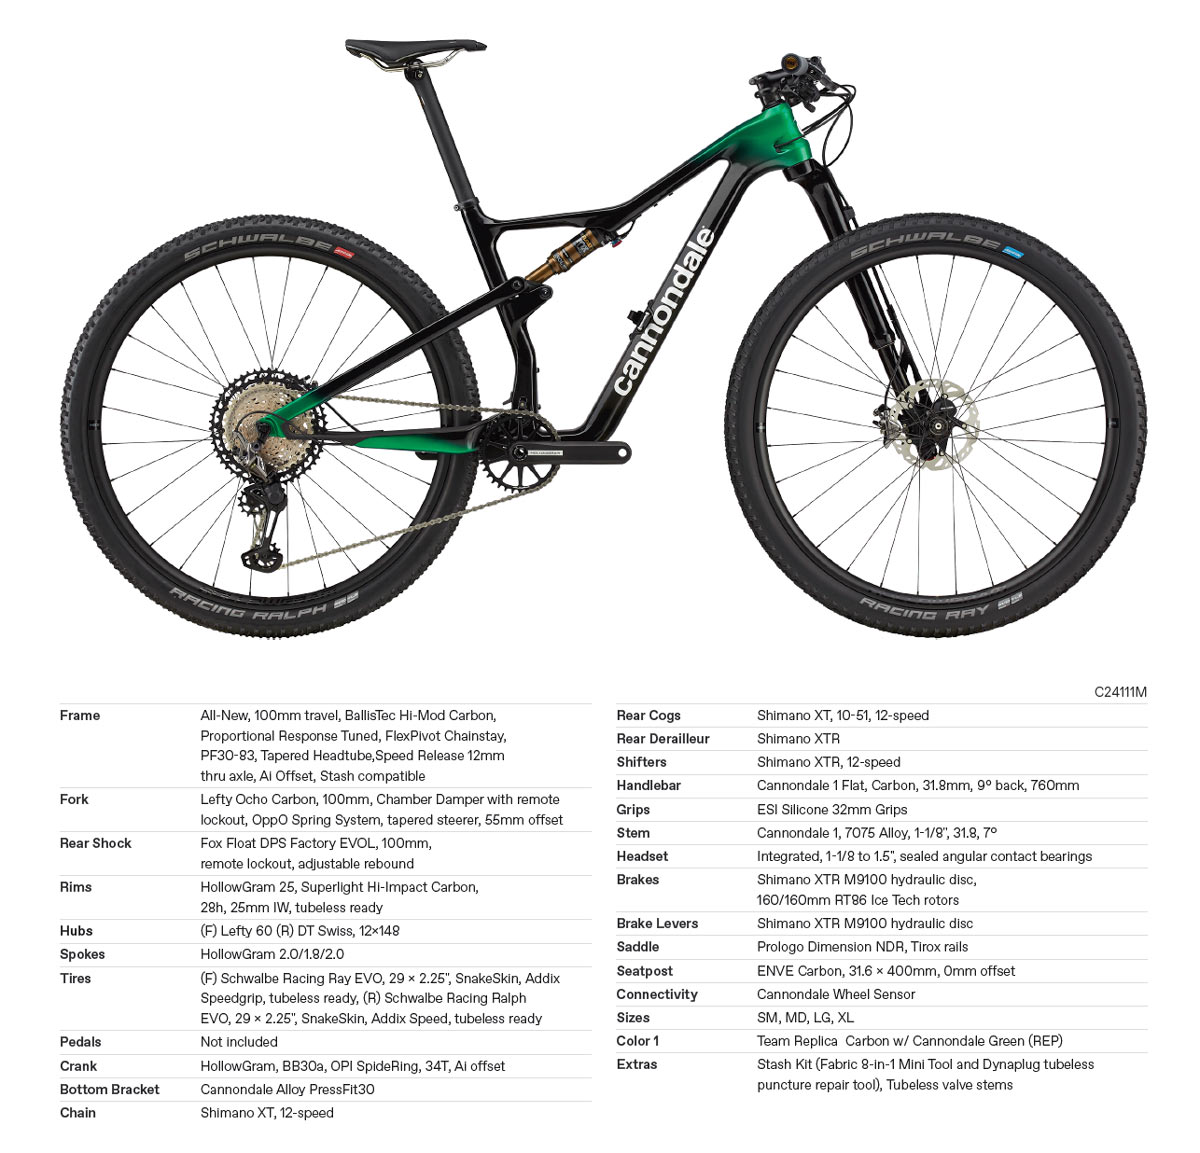 2021 Cannondale Scalpel Hi-Mod 1 carbon mountain bike specs and build components